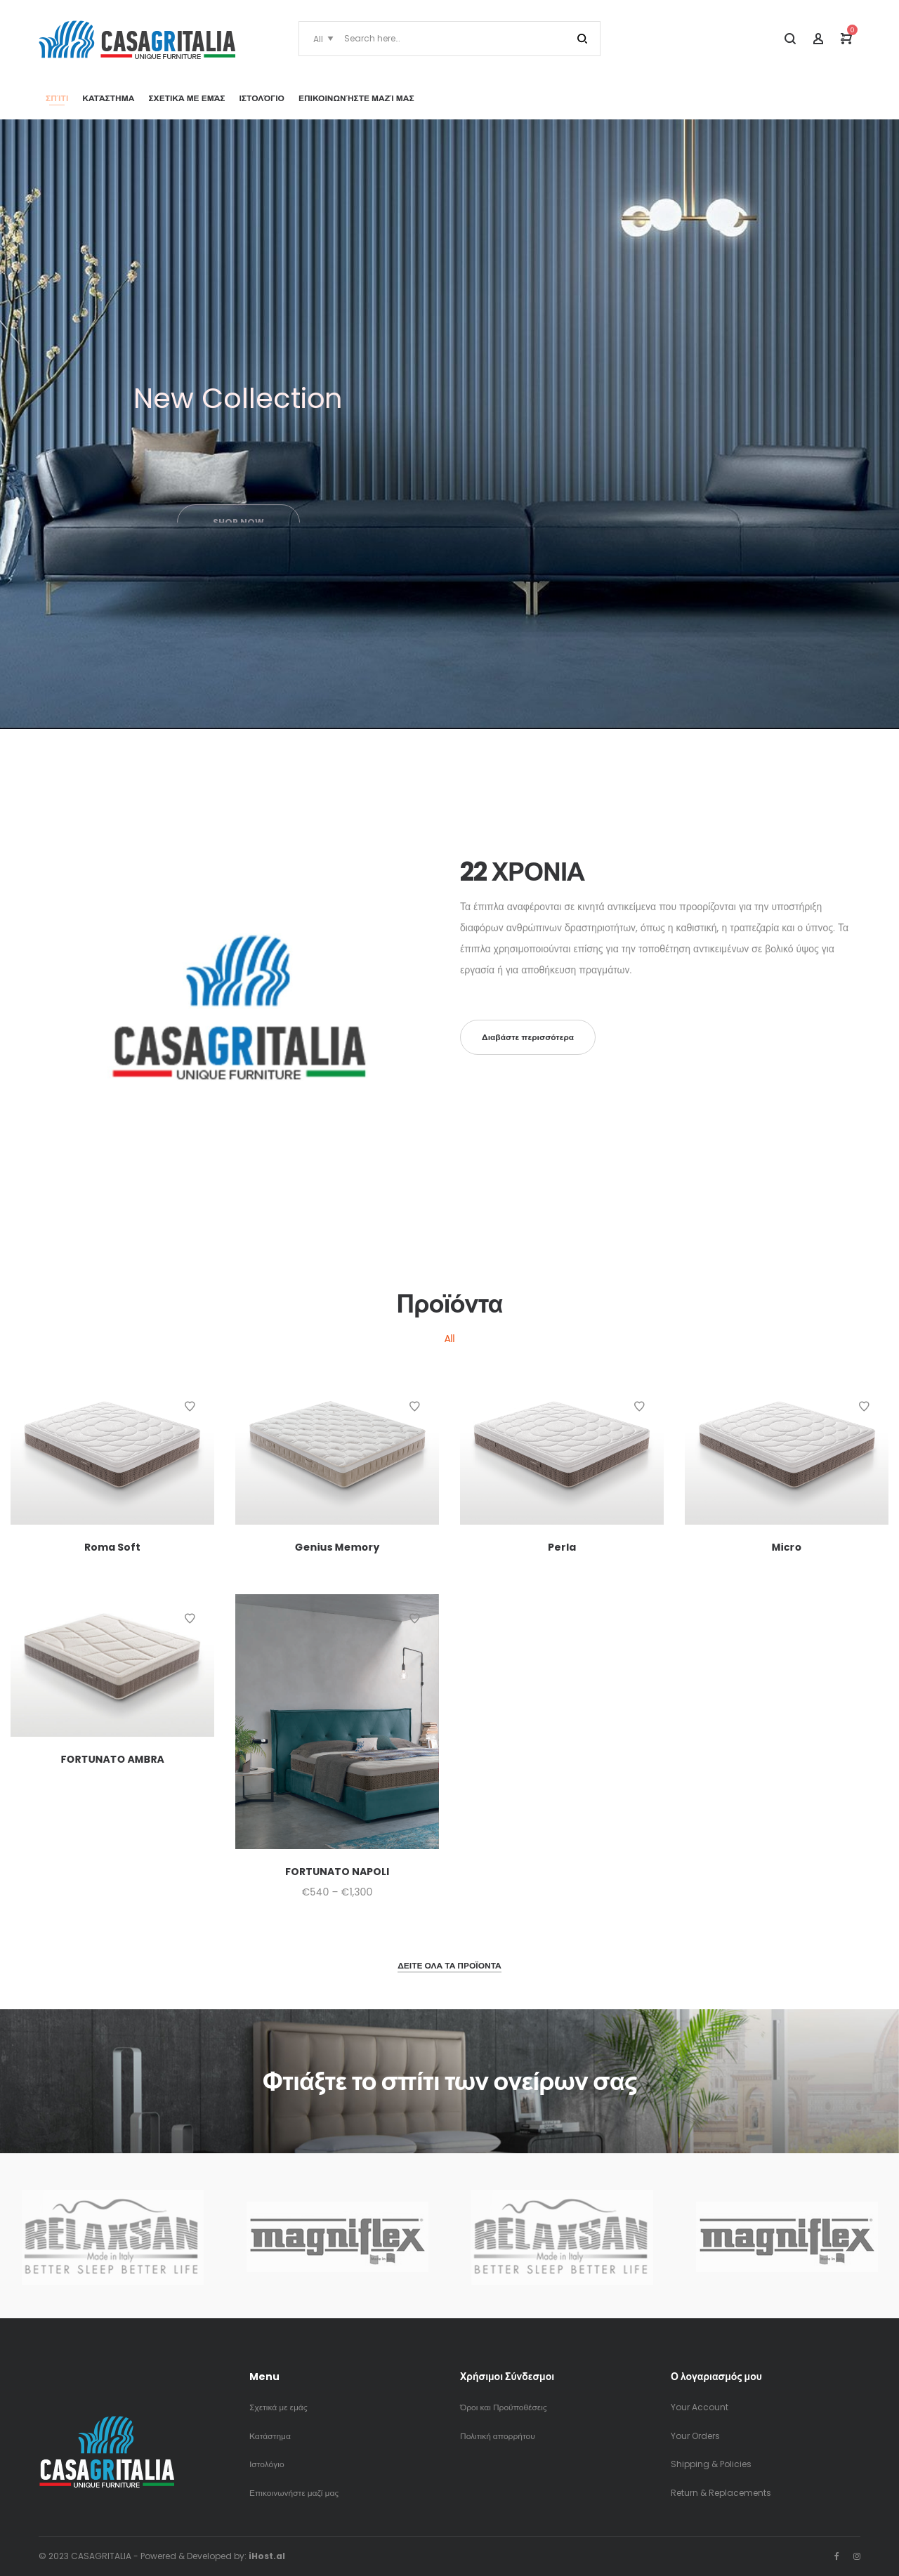 Casagritalia - iHost.al - .AL Domain Registration, Web Hosting & Web Development